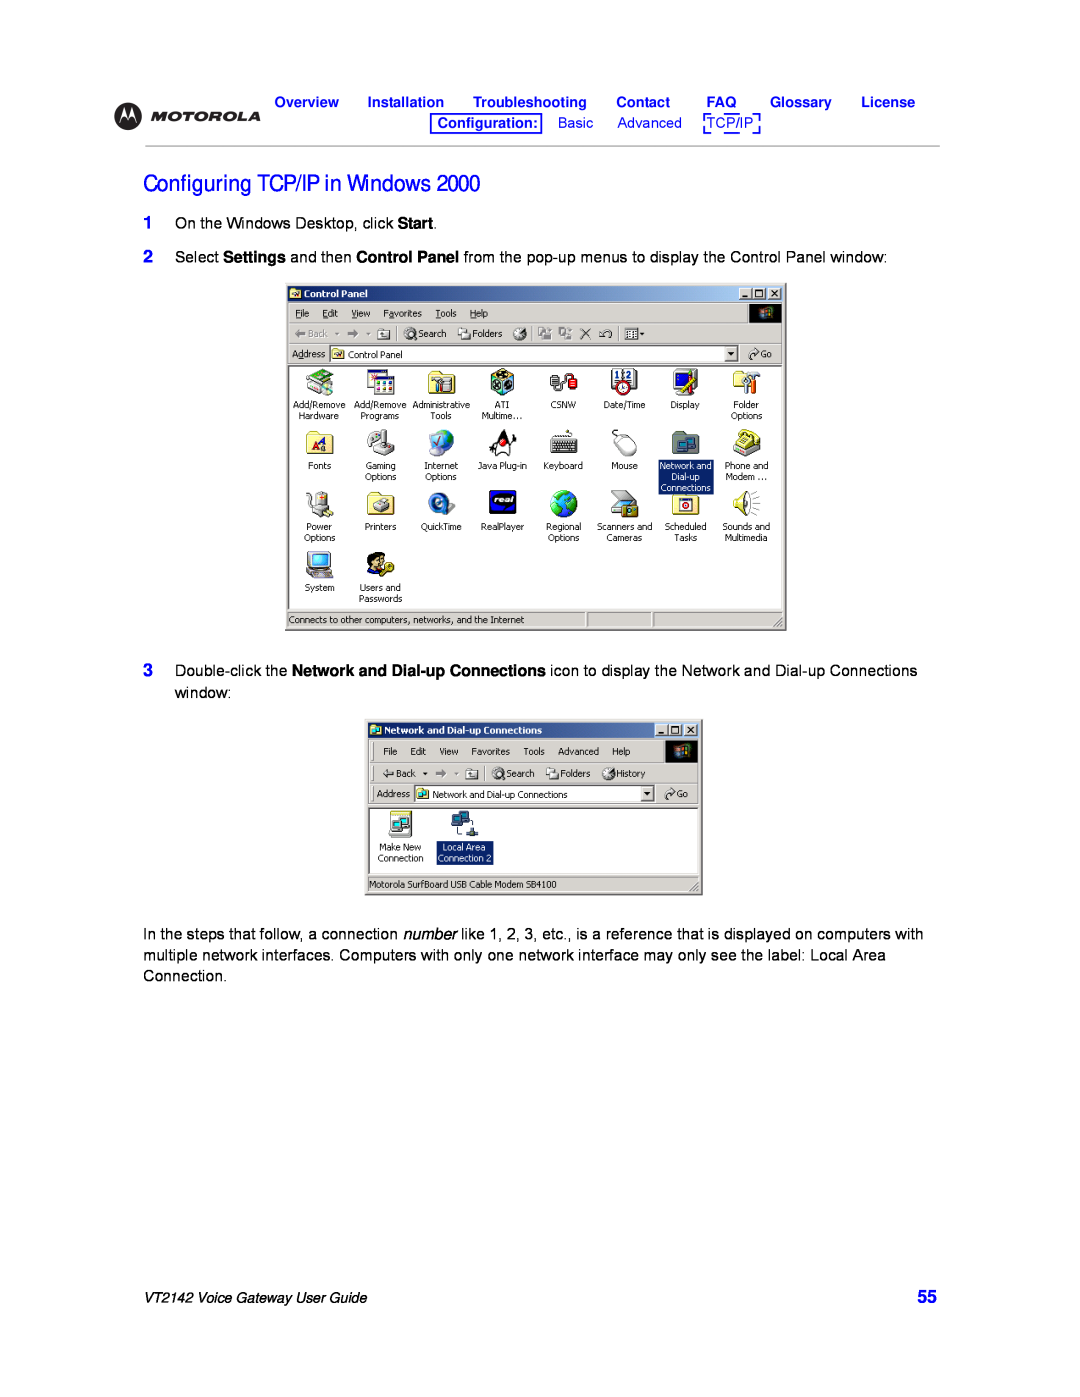 Motorola VT2142 manual Configuring TCP/IP in Windows 